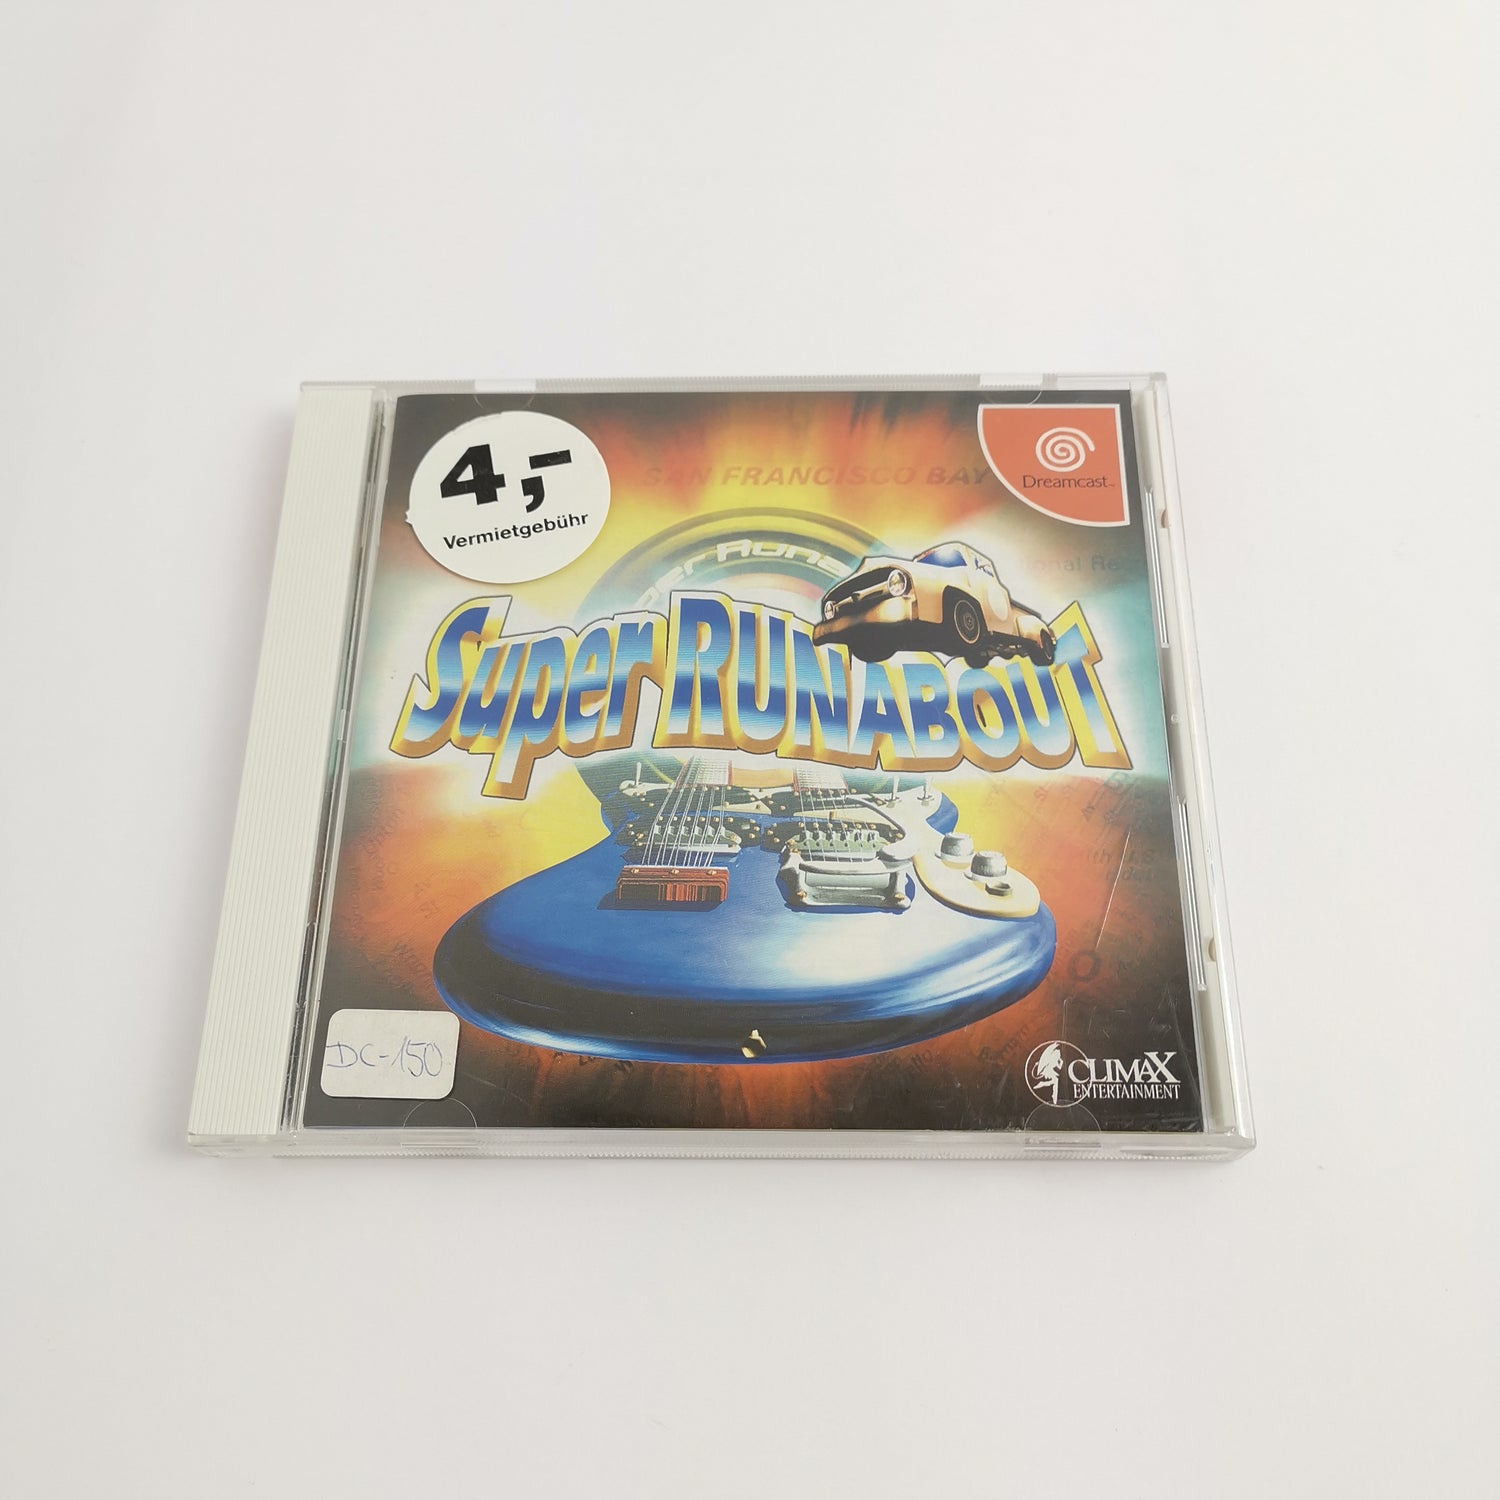 Sega Dreamcast Game: Super Runabout | DC Dream Cast - OVP NTSC-J JAP